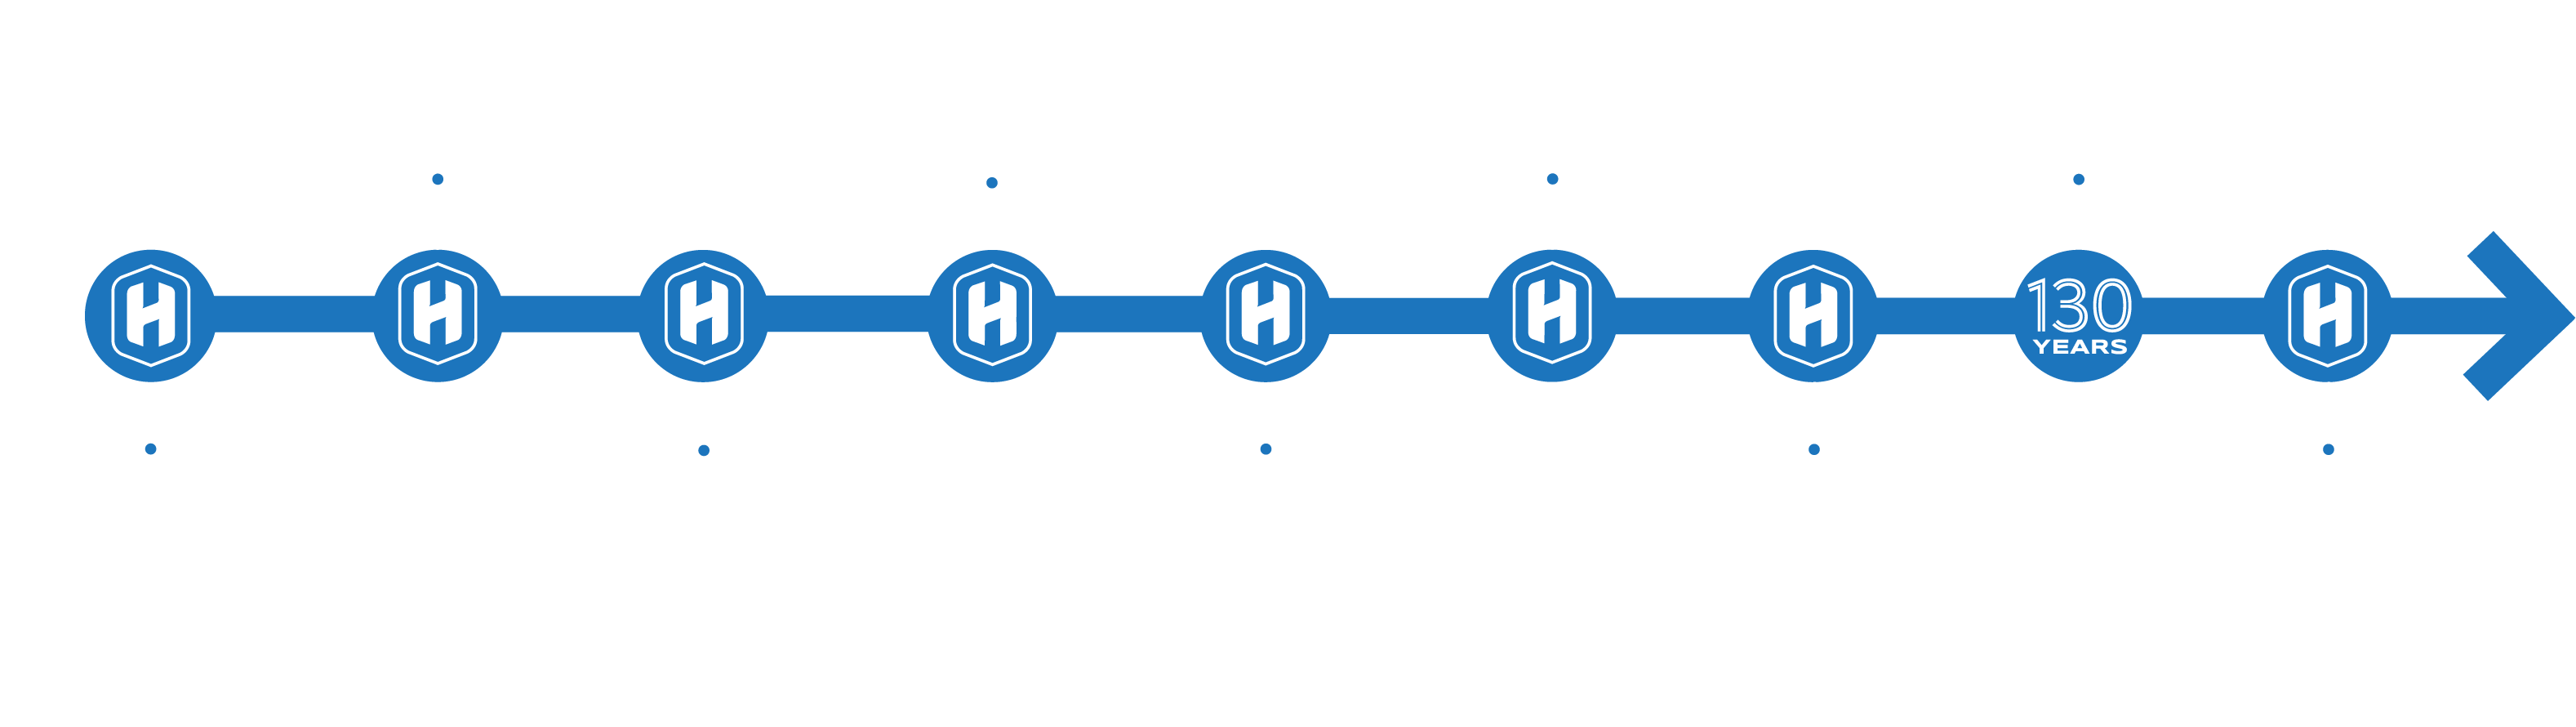 EW Howell Timeline for 2022